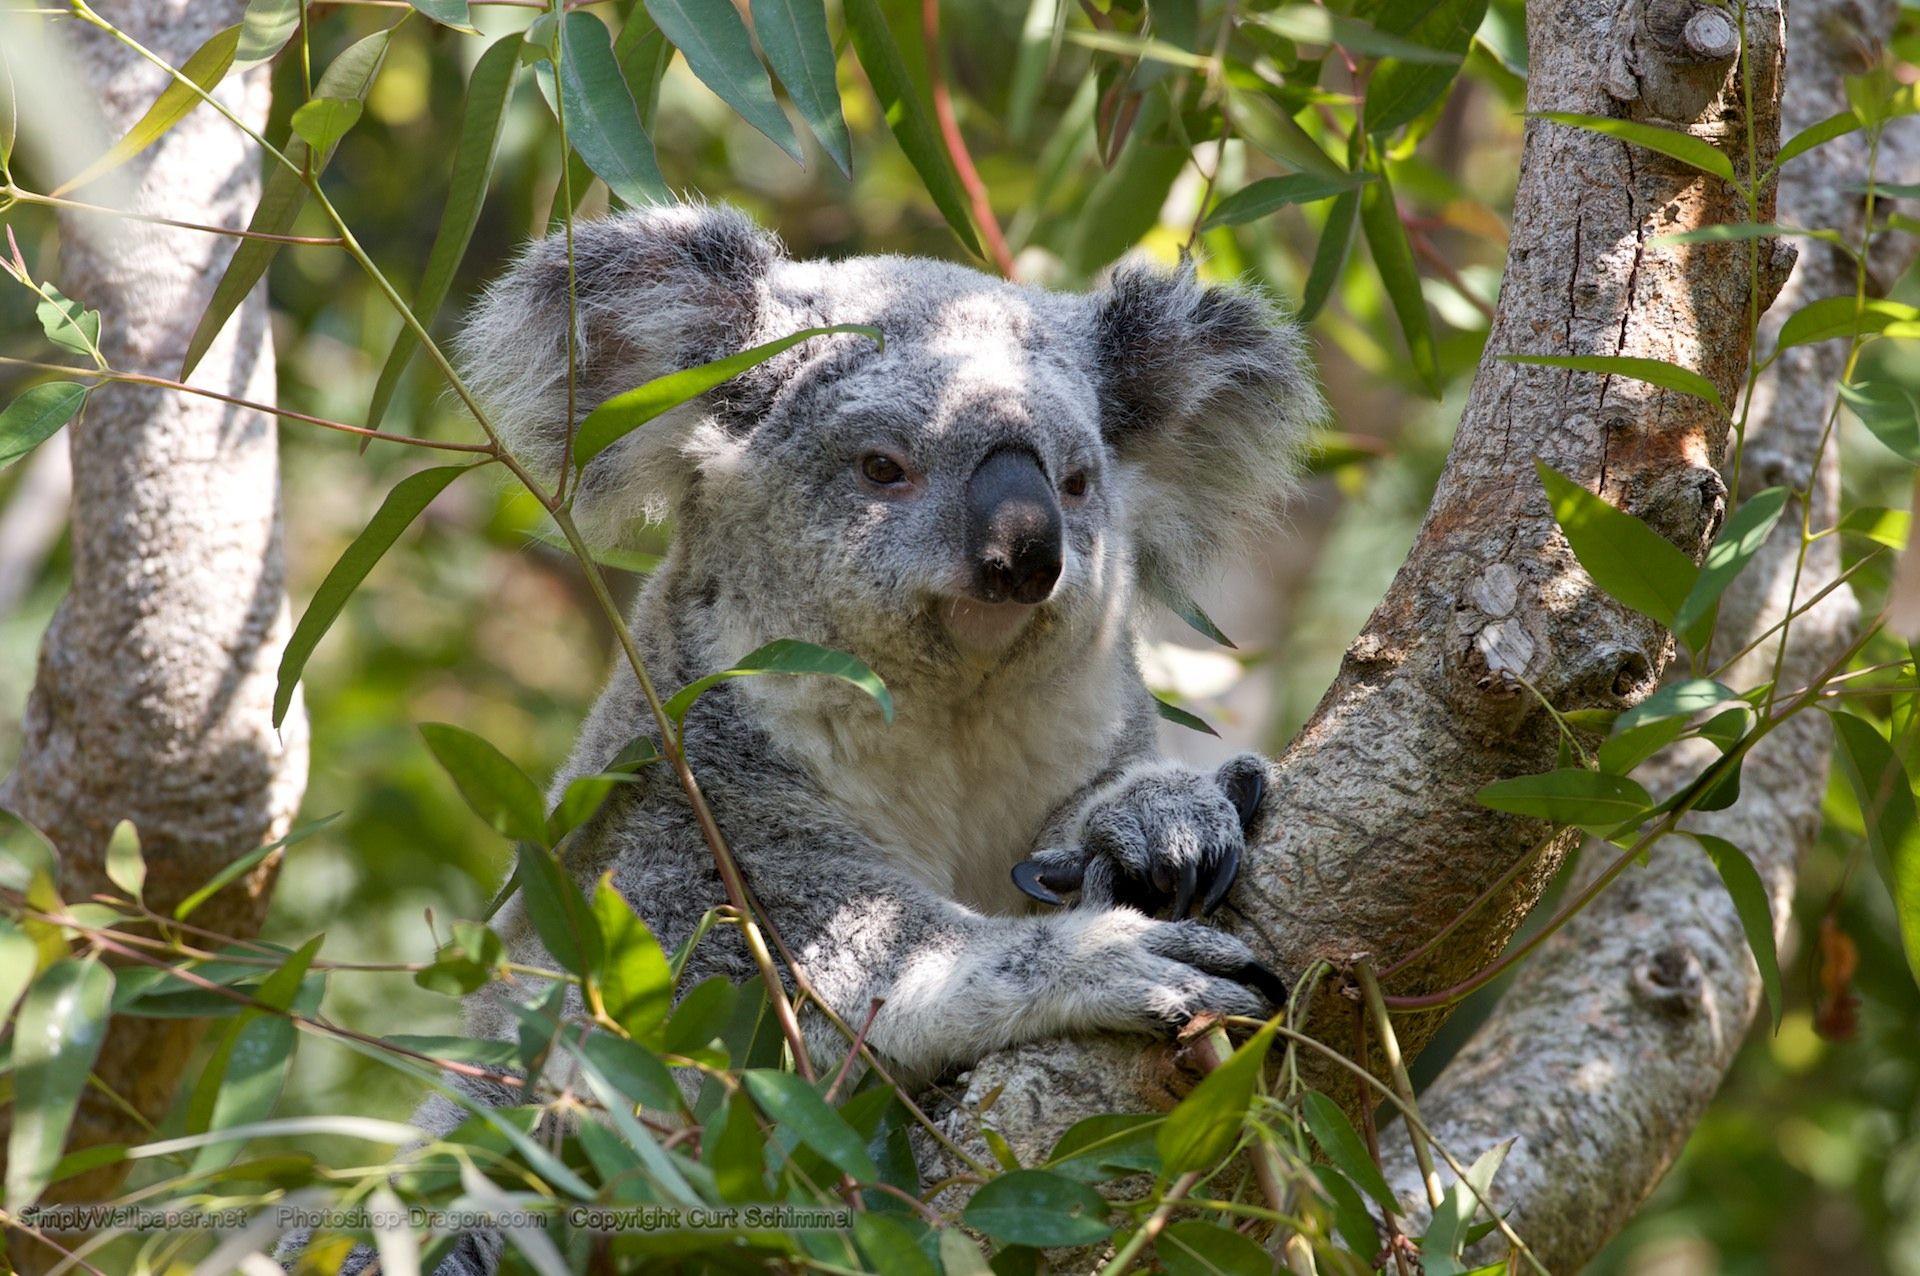 Animals Wallpaper: Image Of Koala Bears Wallpaper Desktop With